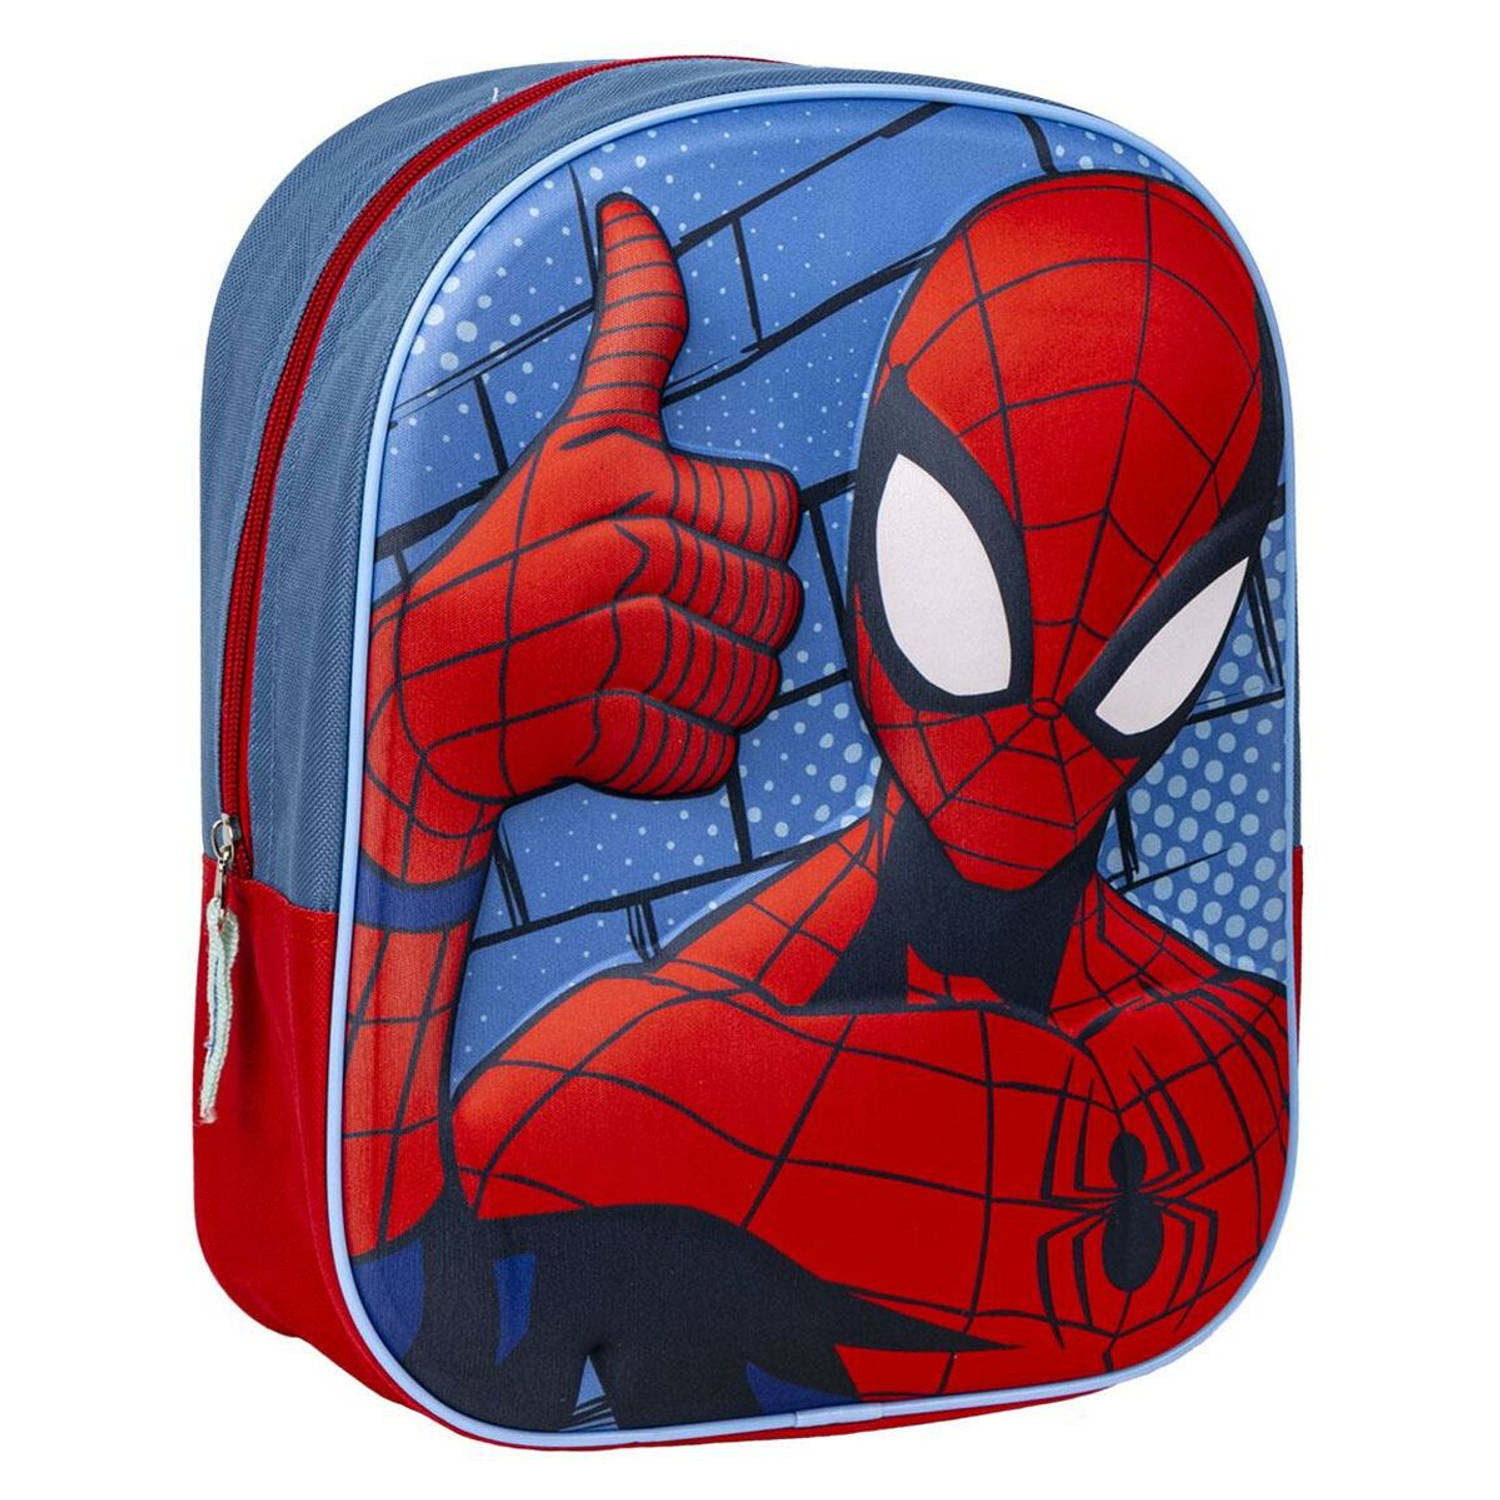 Spiderman 3D rugzak - Okay - Rood/Blauw